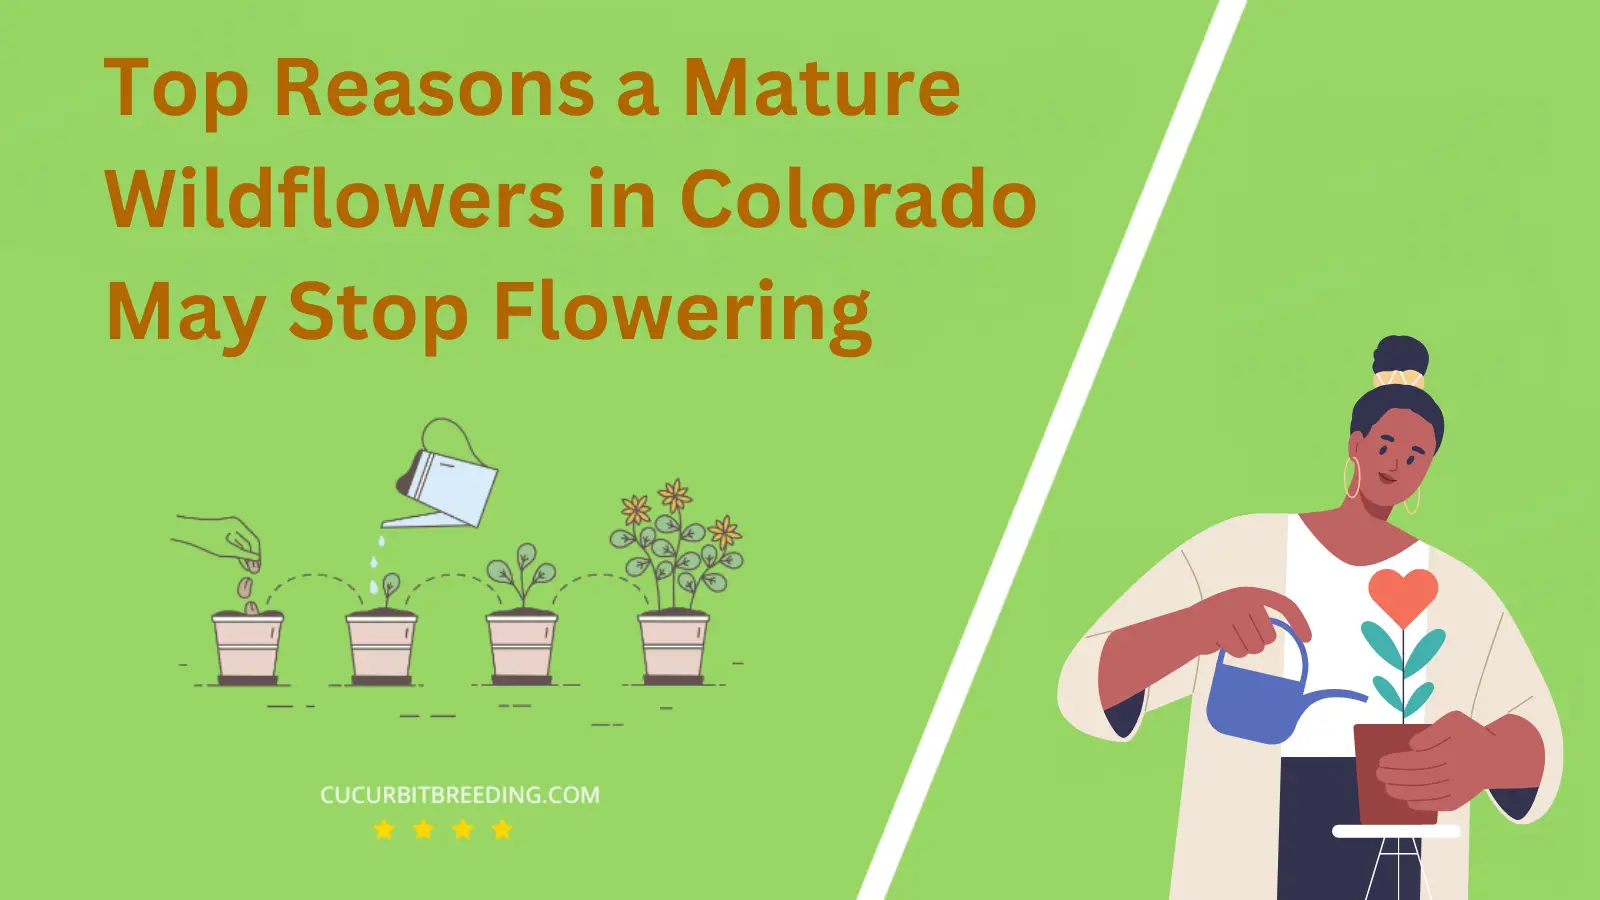 Top Reasons a Mature Wildflowers in Colorado May Stop Flowering